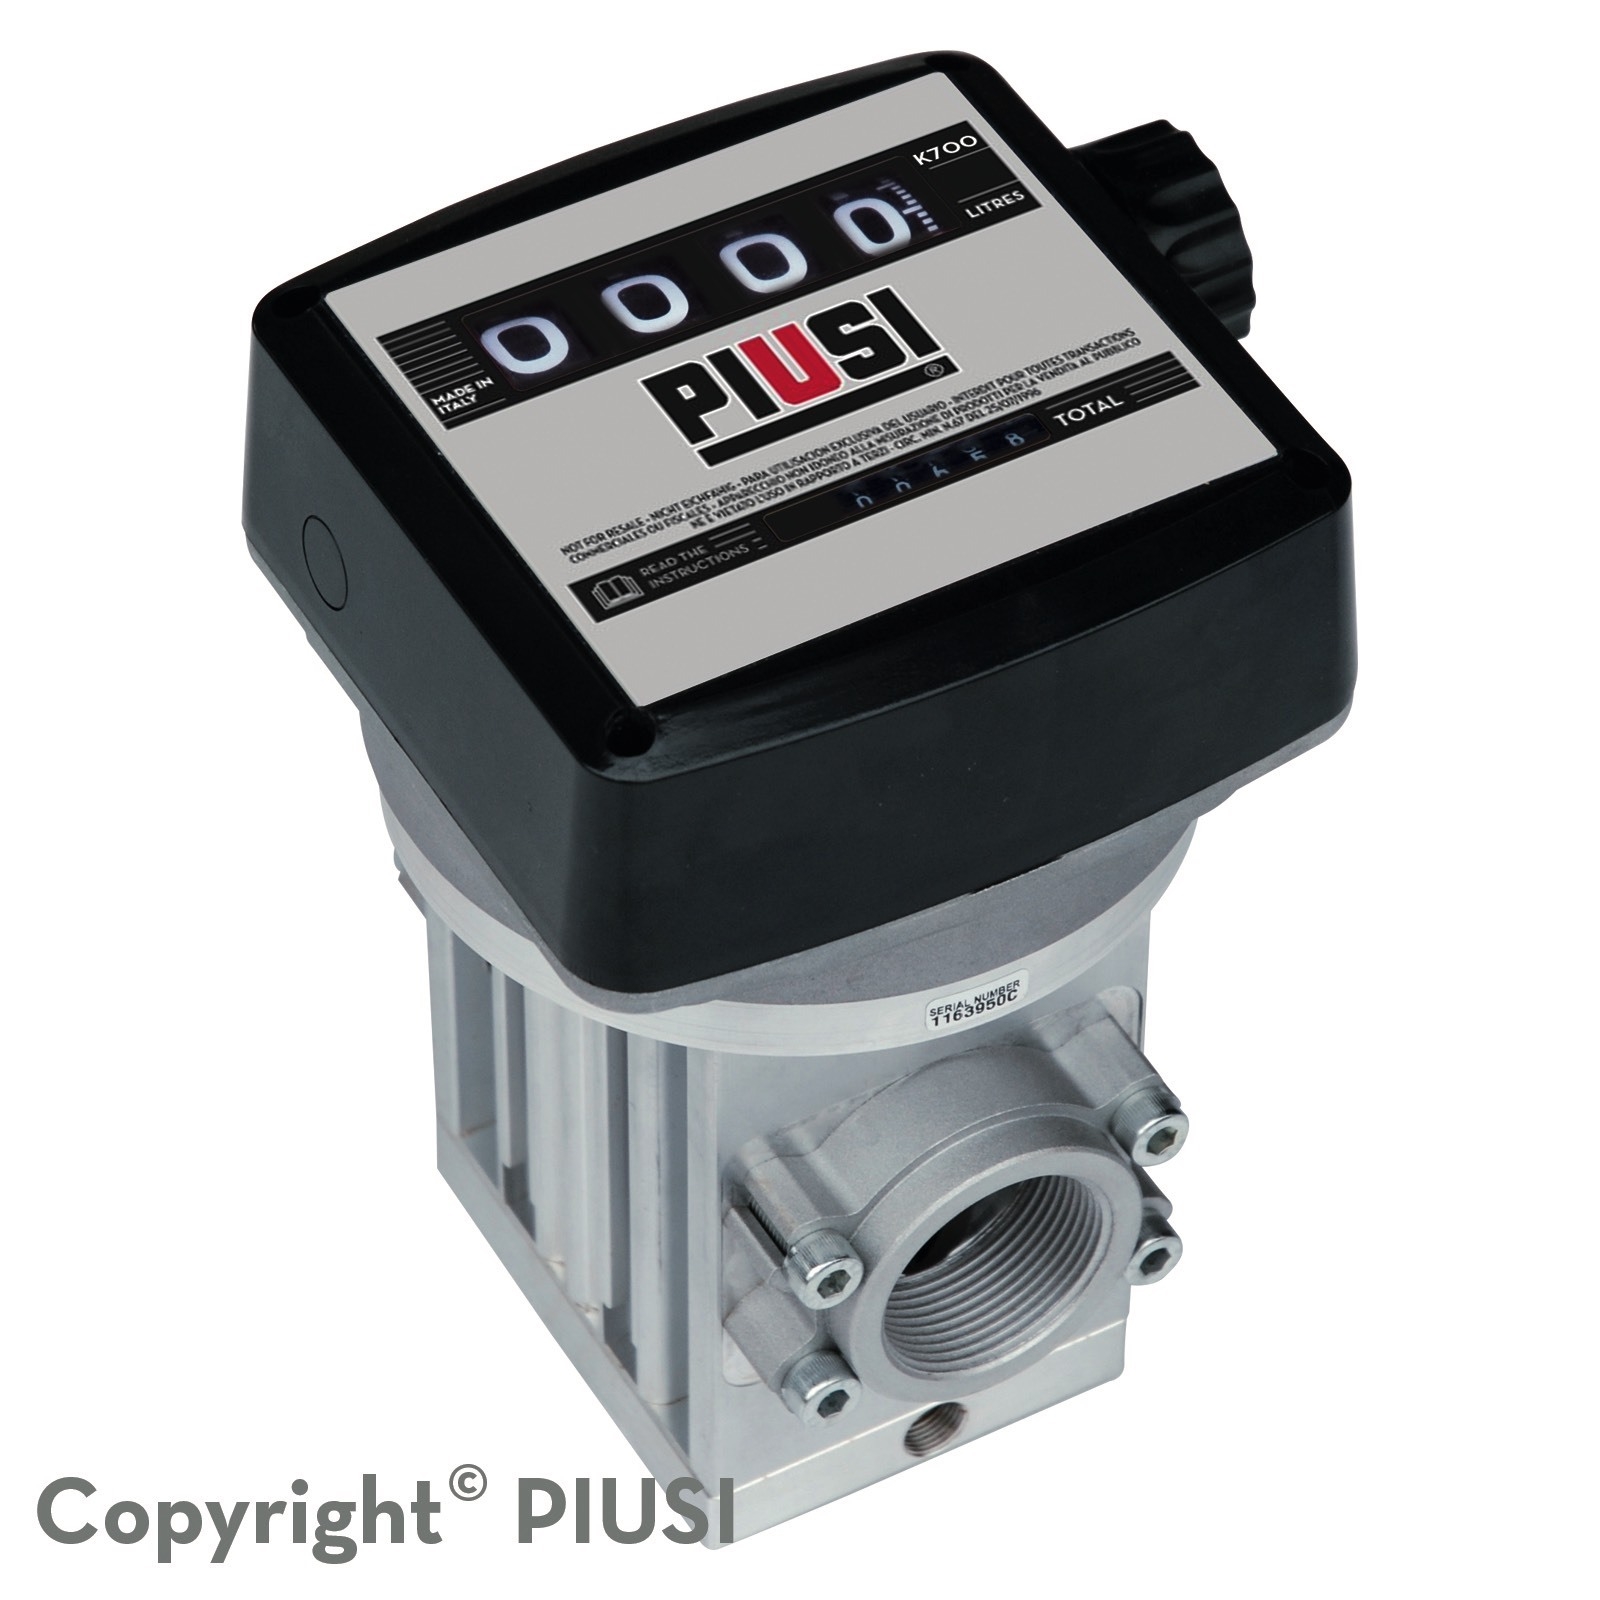 Đồng hồ đo dầu diesel Piusi K700M